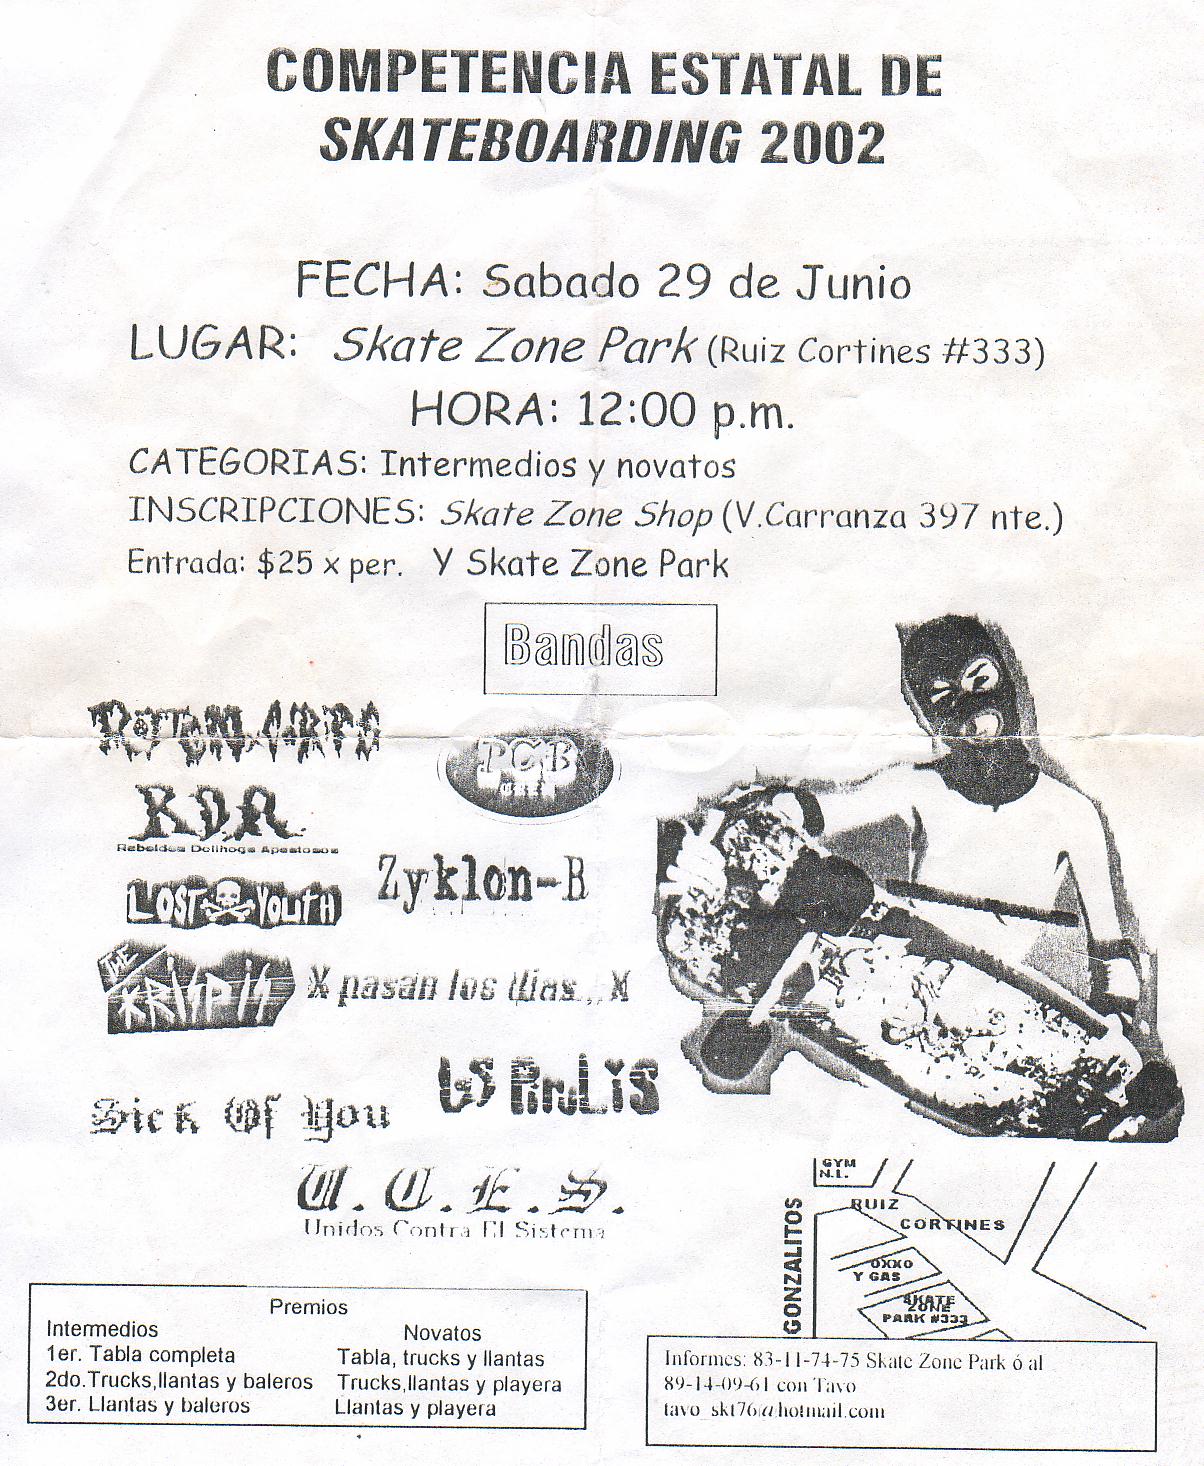 concurso_estatal_skateboard_2002.jpg